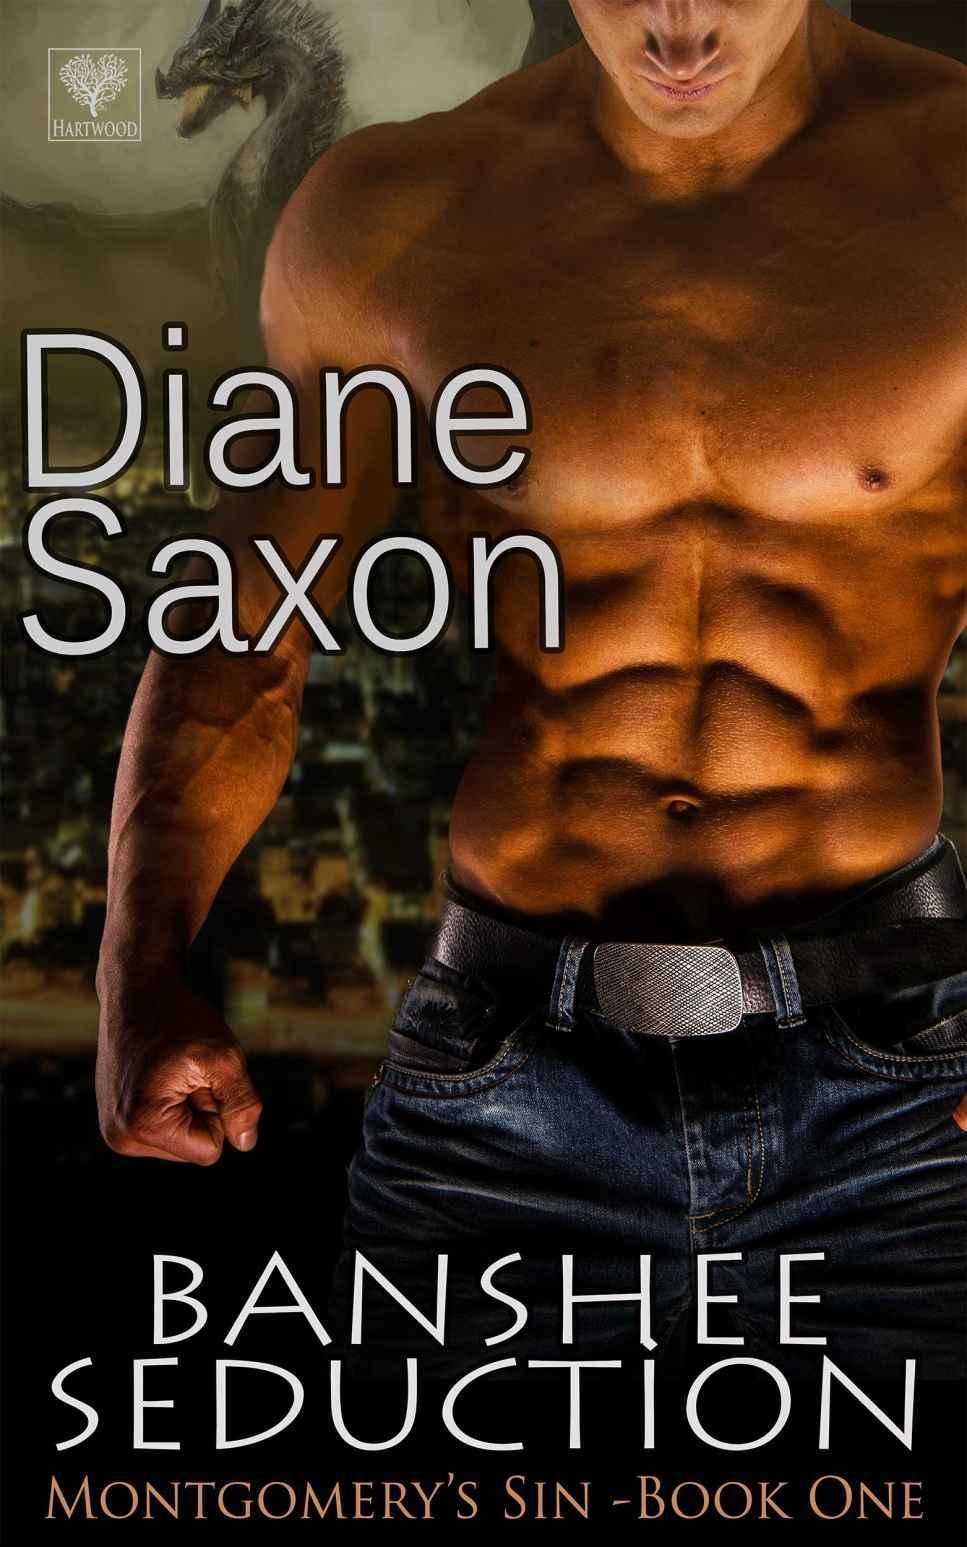 Banshee Seduction (Montgomery's Sin Book 1) by Diane Saxon